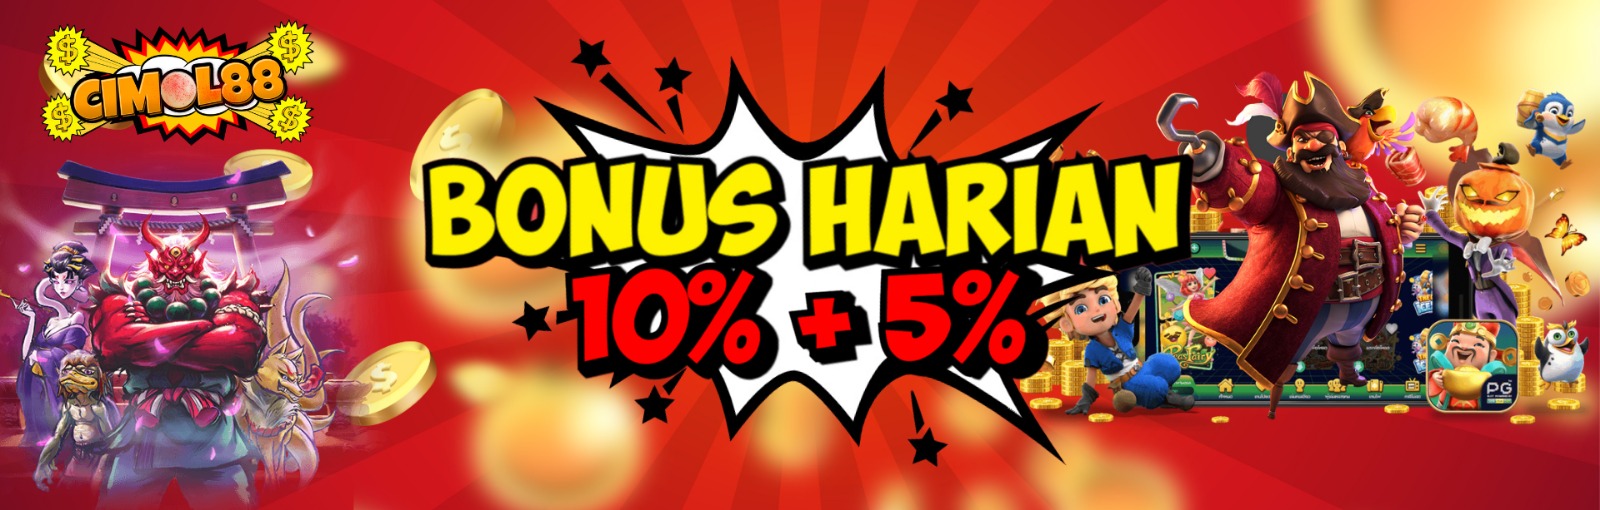 BONUS HARIAN 10% + 5%